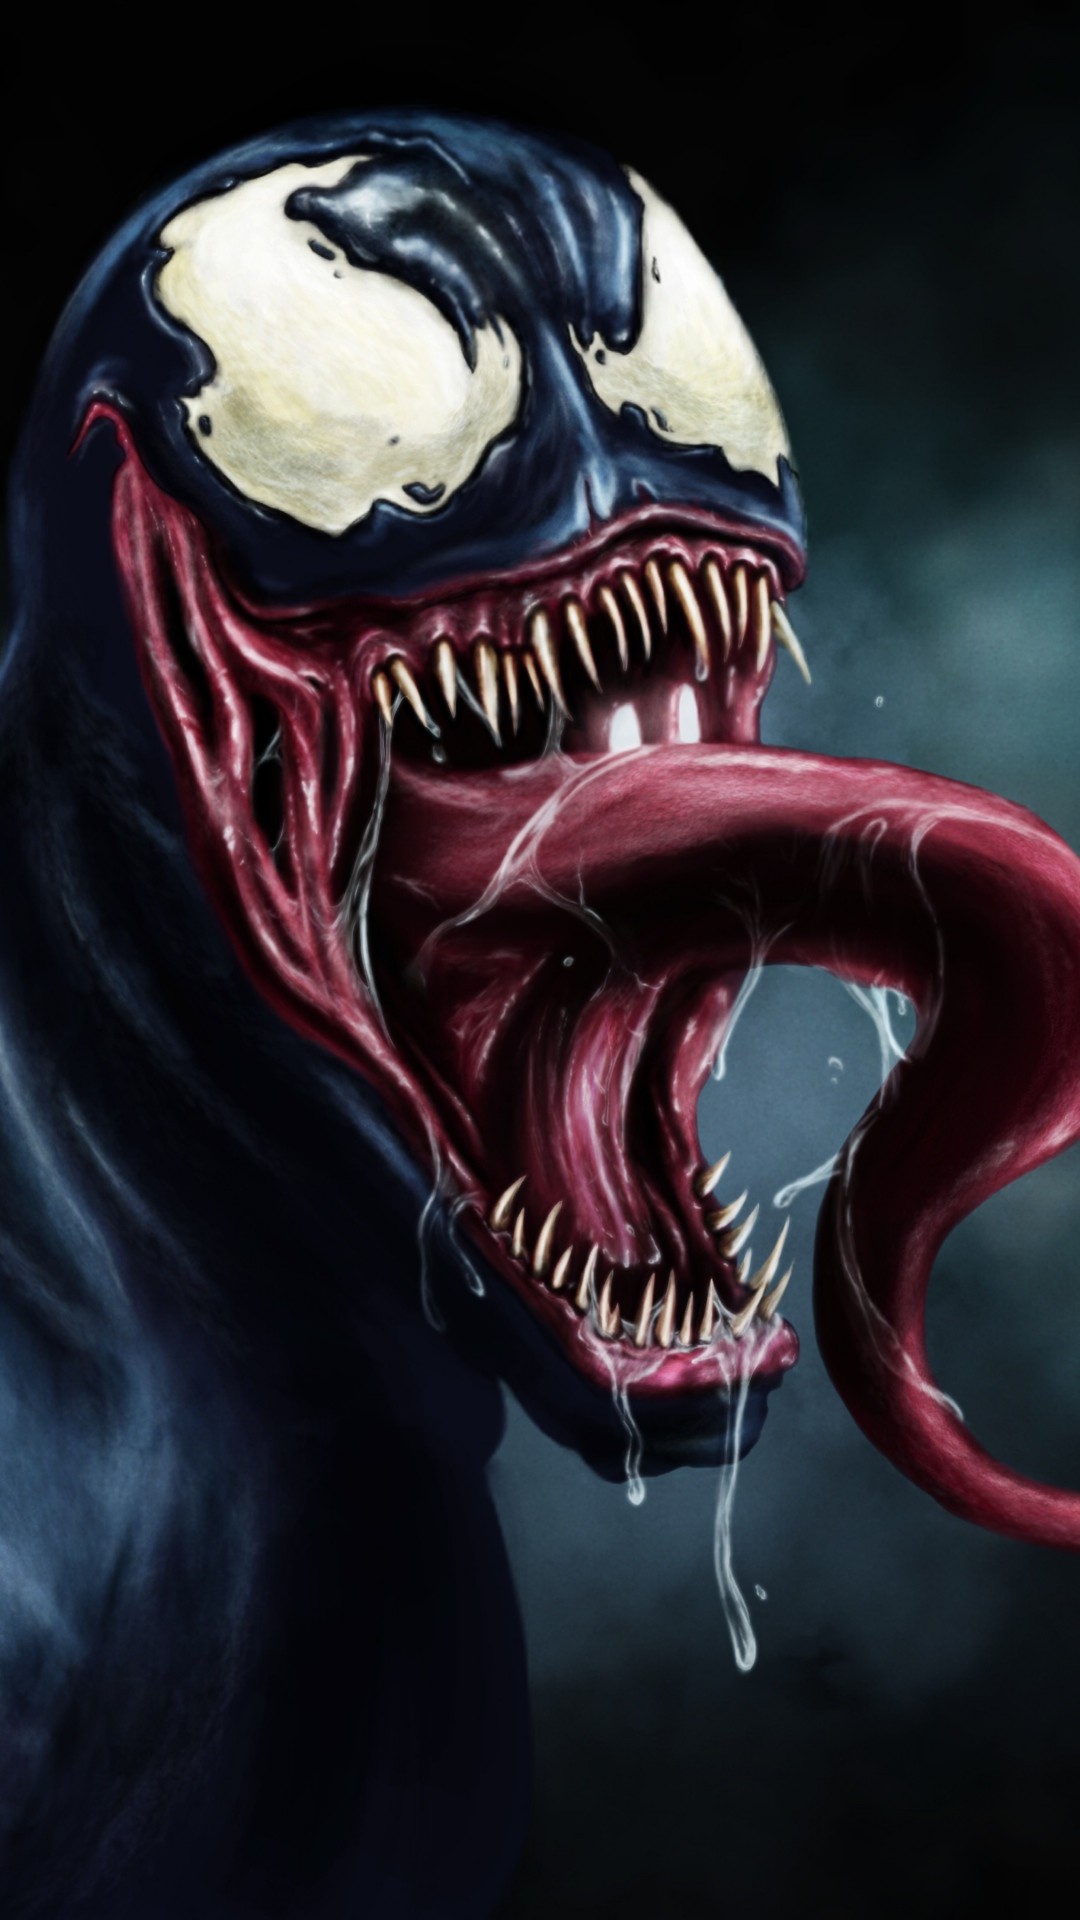 1080x1920 Download Wallpaper  Venom, Eddie brock, Marvel .